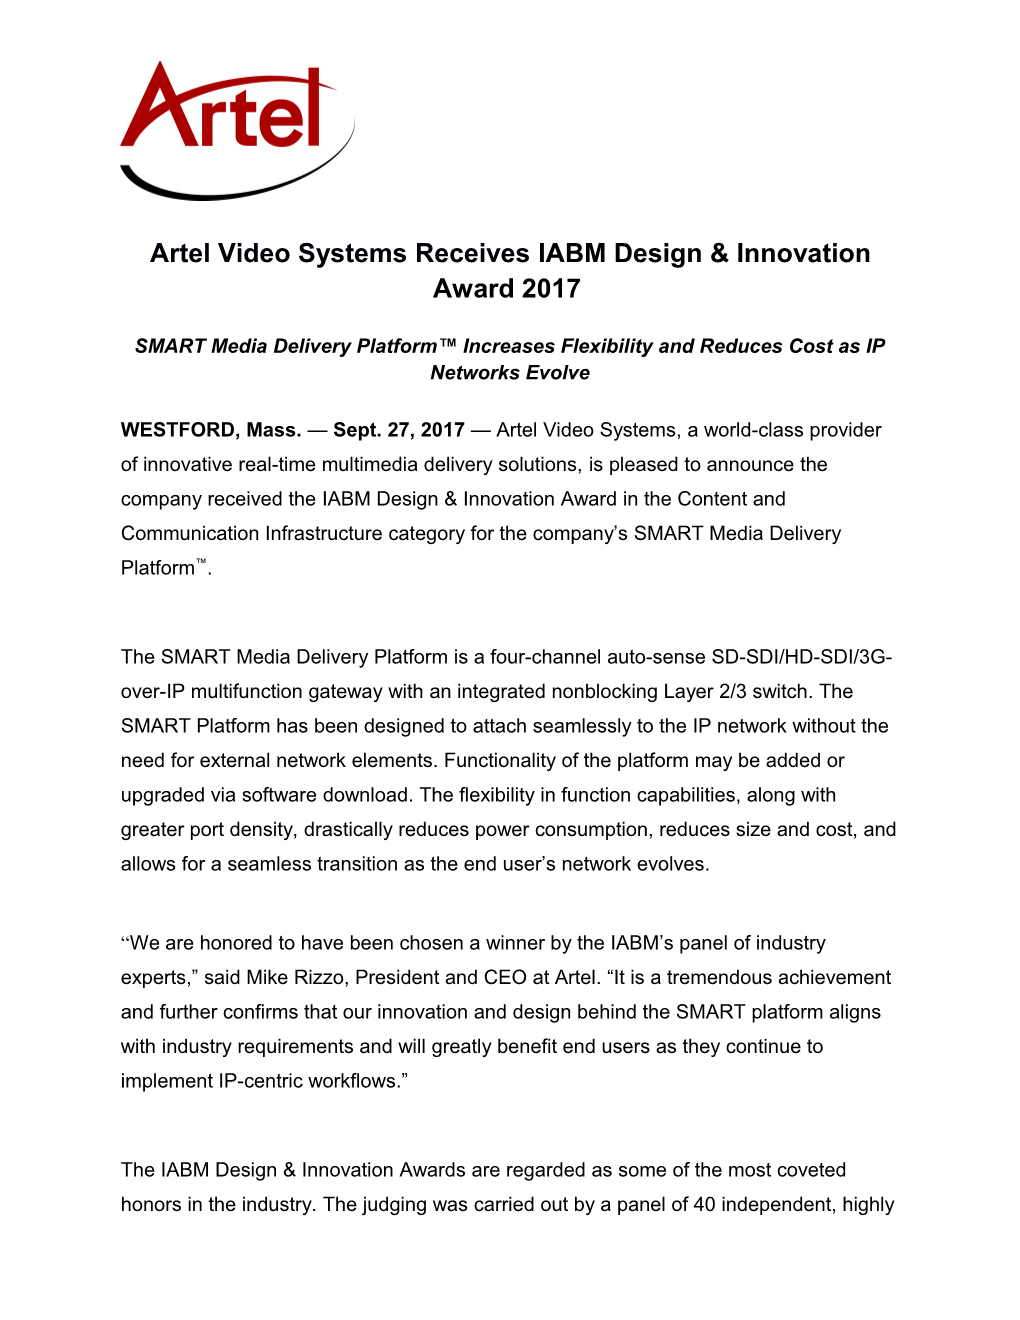 Artel Video Systems Press Release